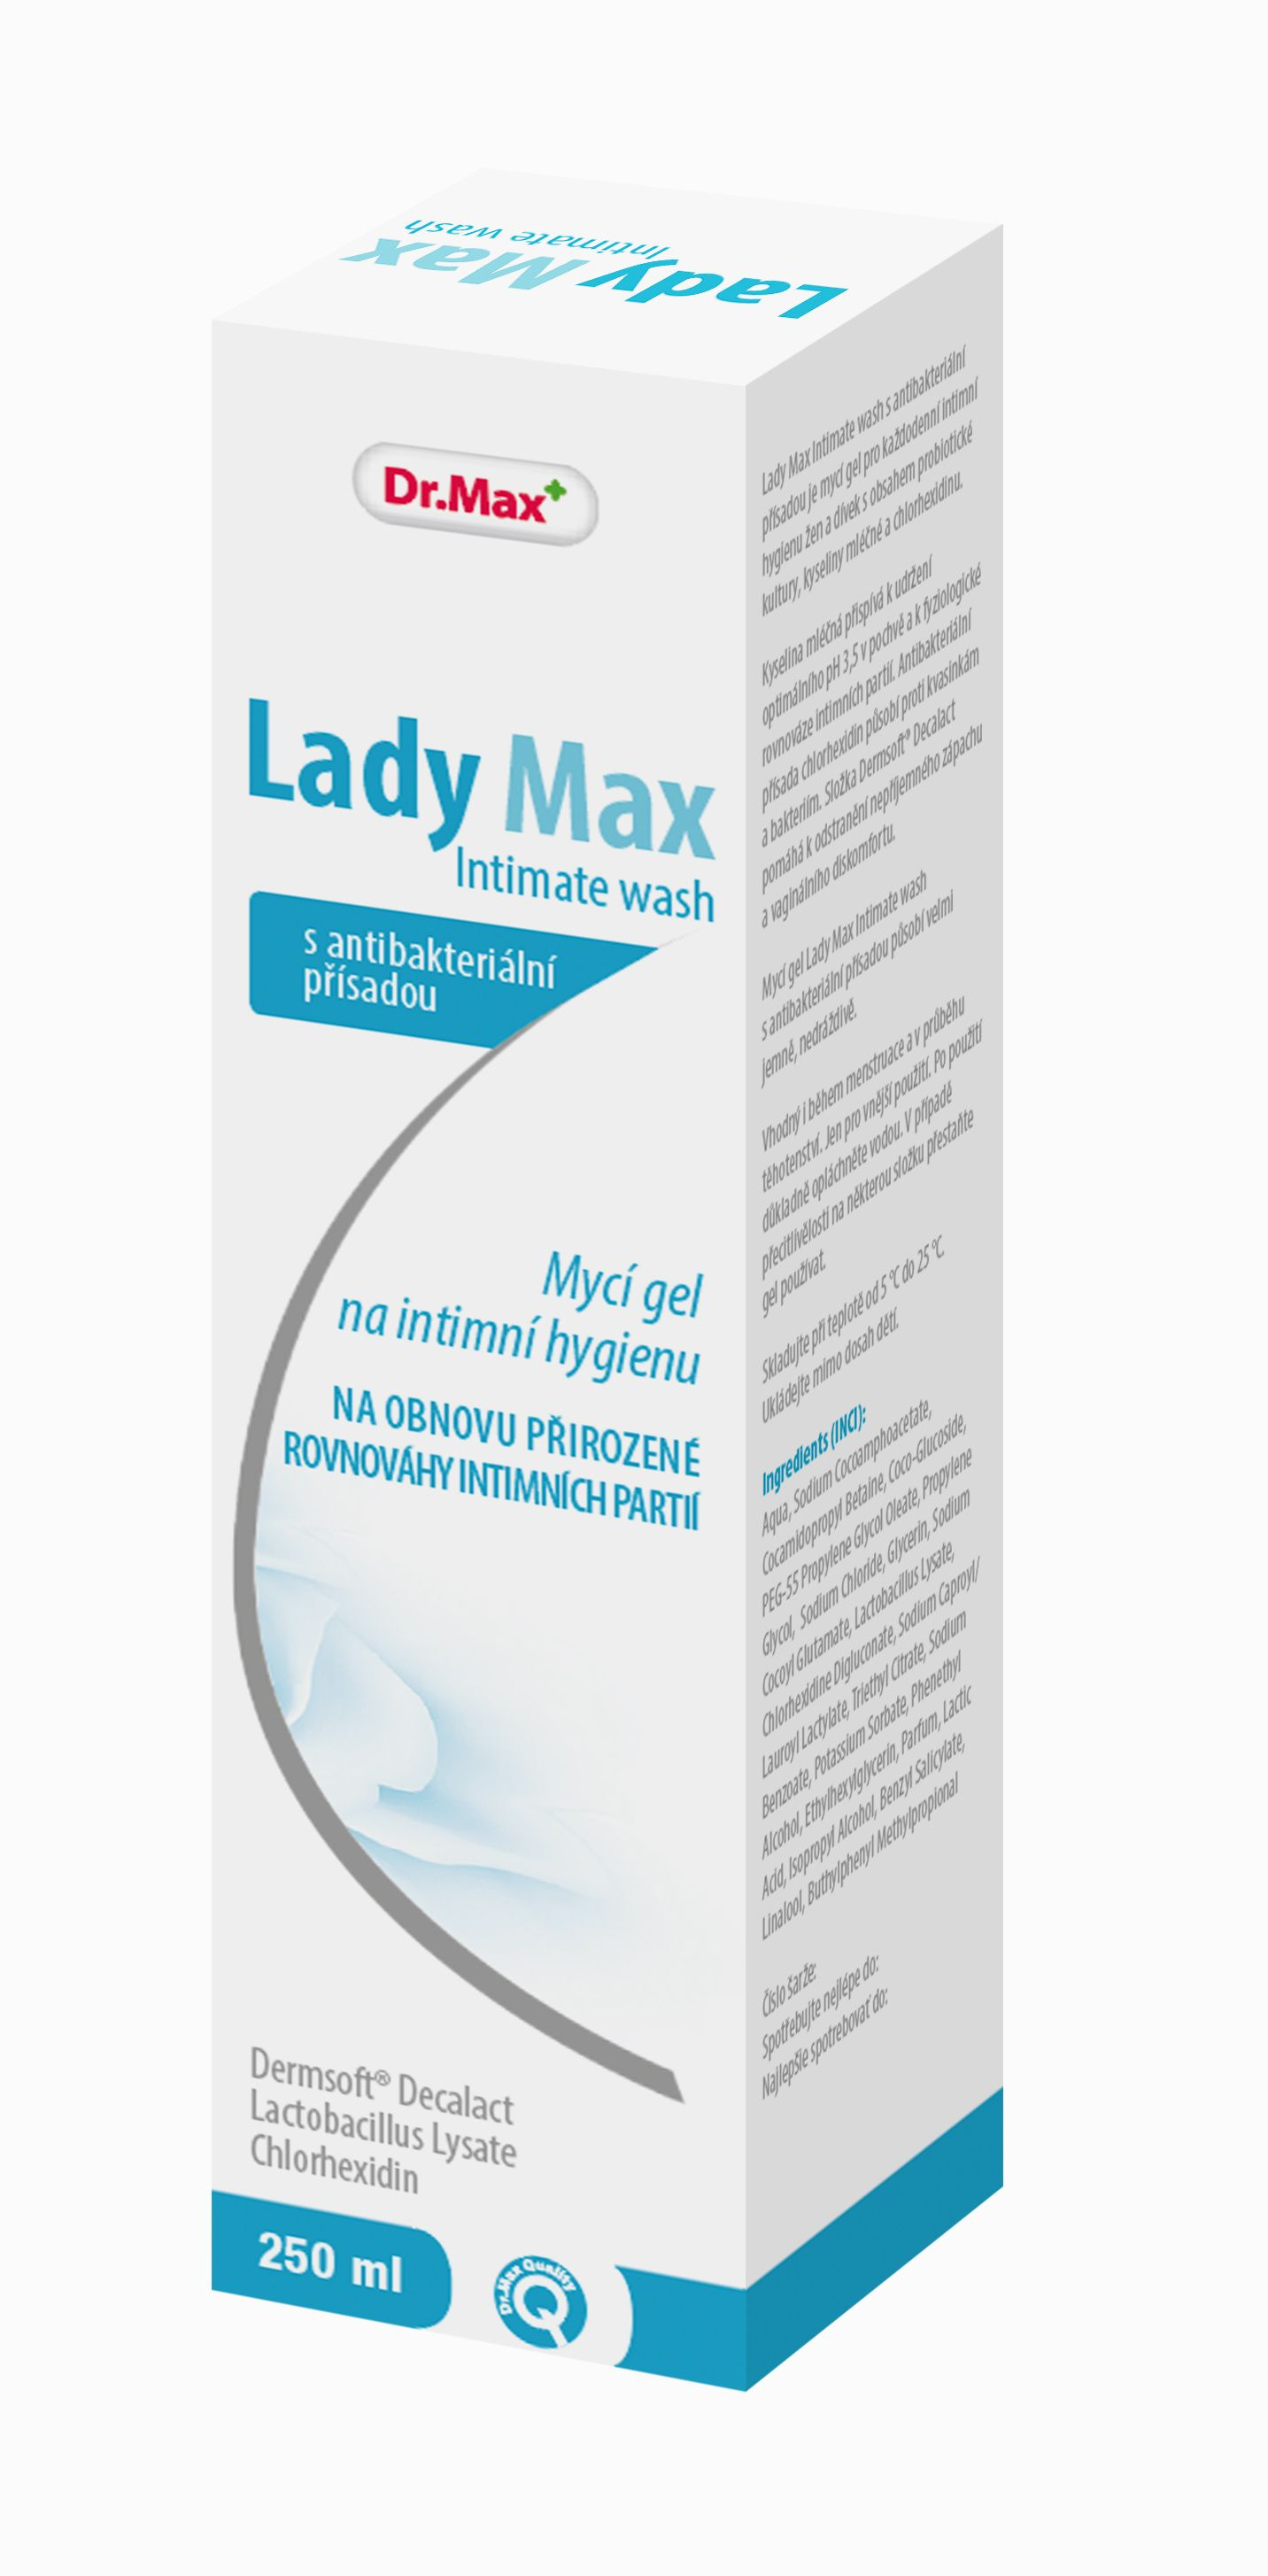 Dr.Max Lady Max Intimate wash antibacterial 250 ml Dr.Max